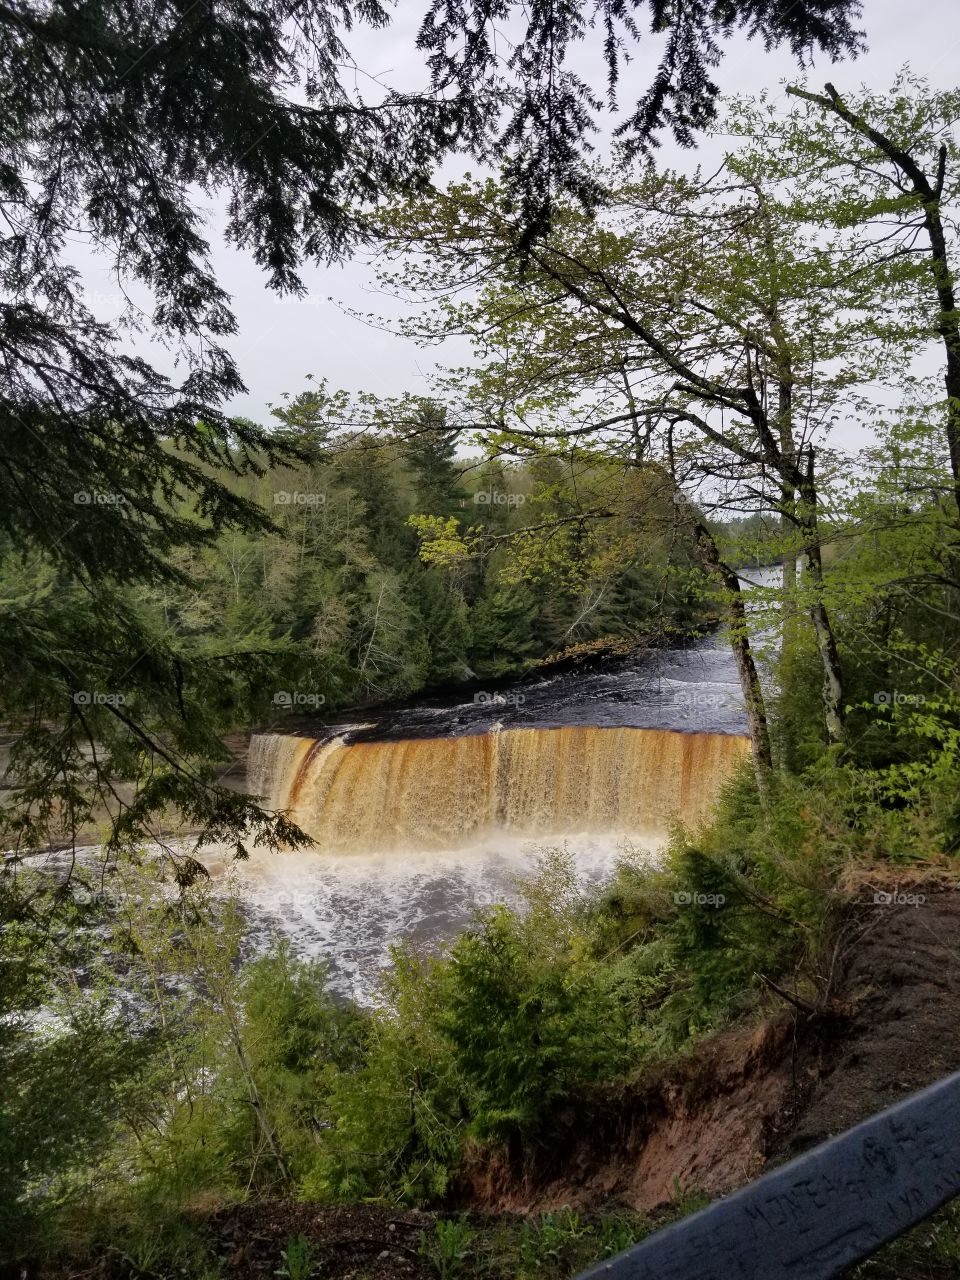 Waterfall in Michigan! So beautiful to see nature.